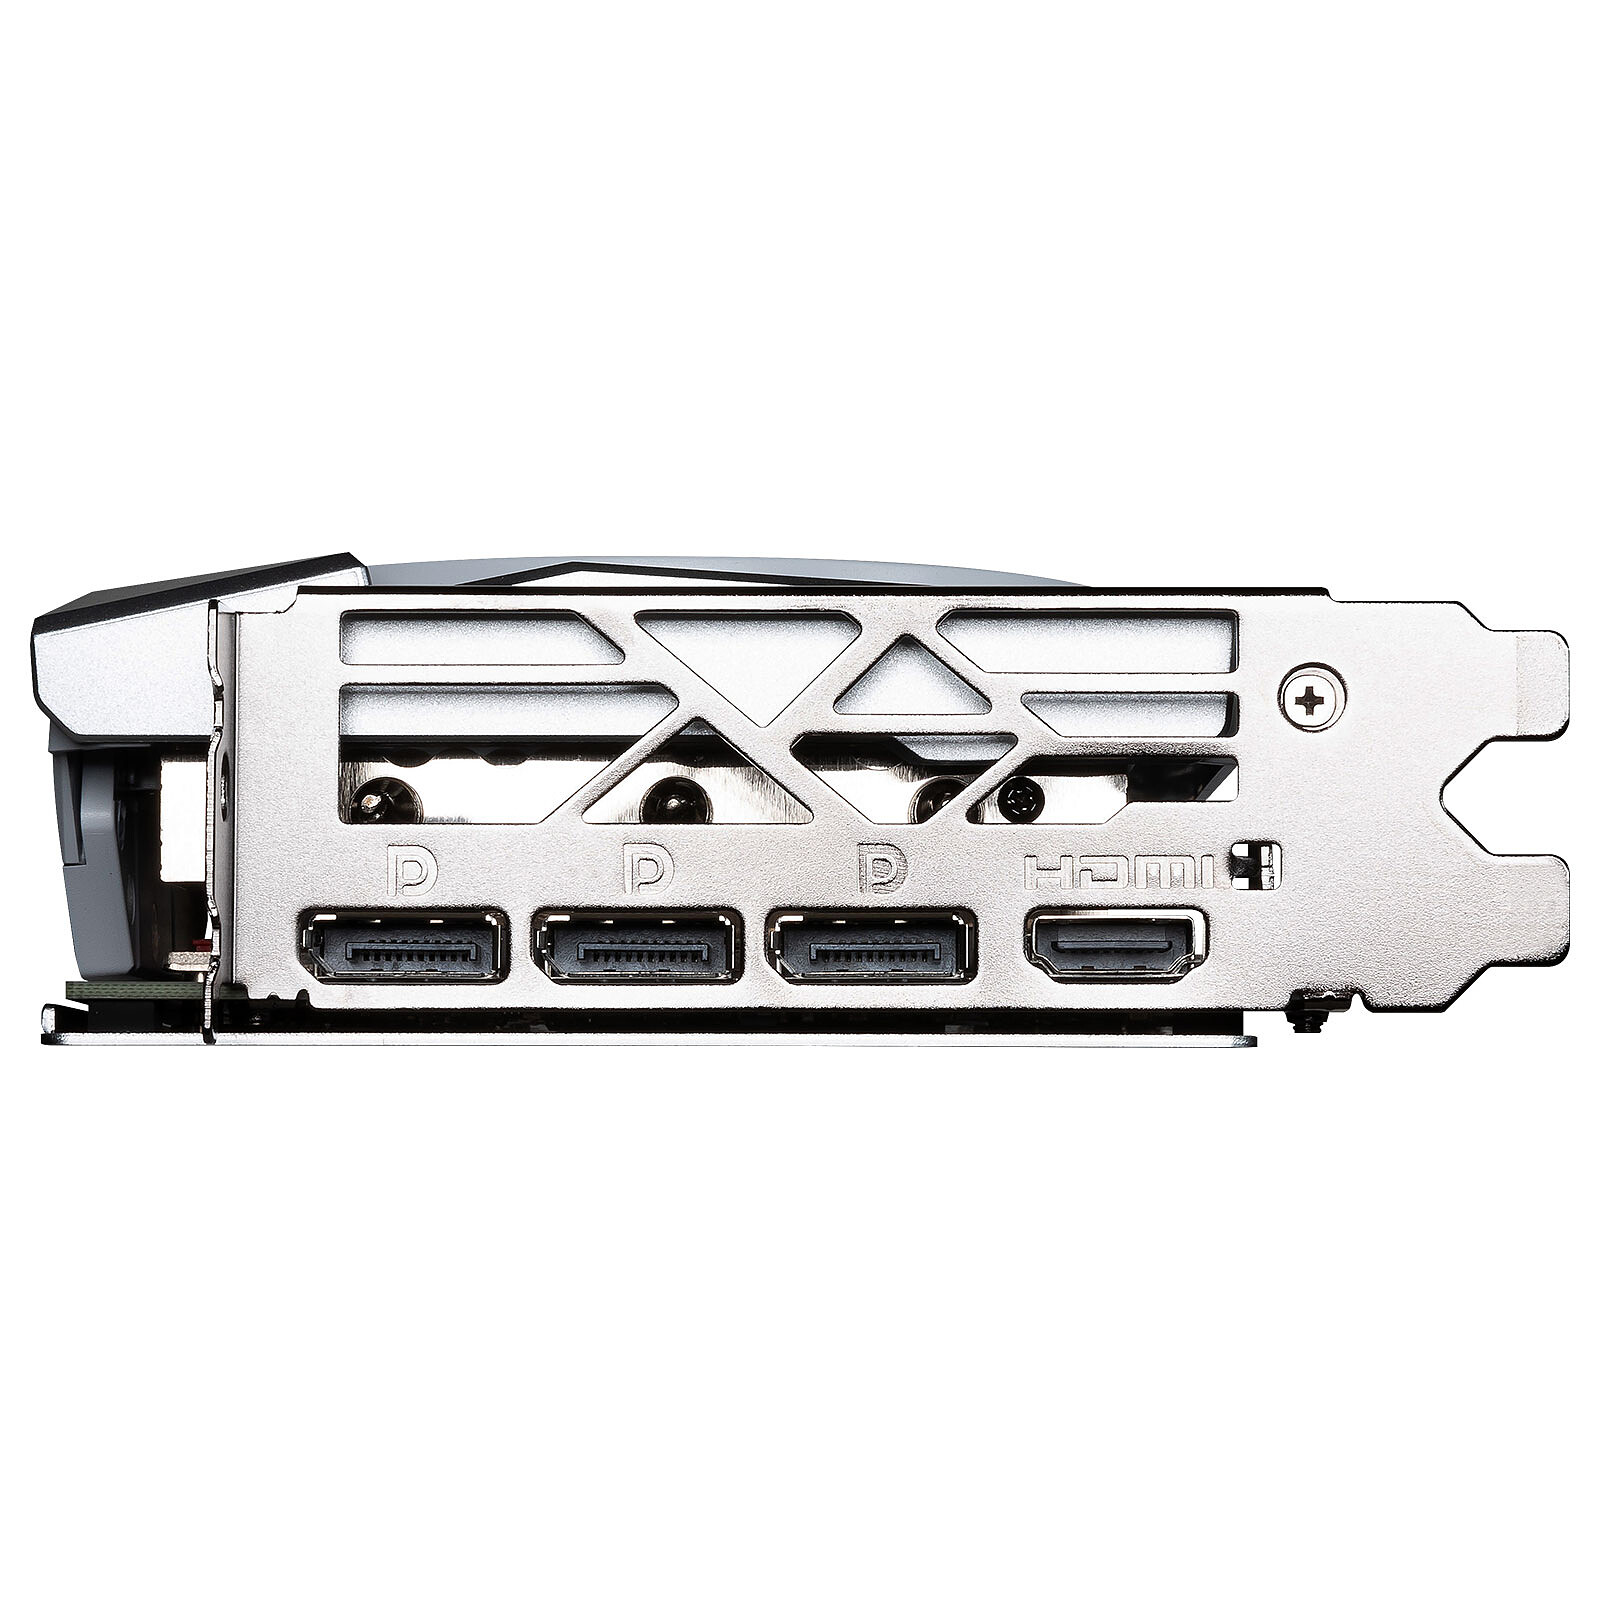 MSI GeForce RTX 4060 Ti GAMING X SLIM WHITE 16GB G406TGXSW16 B&H